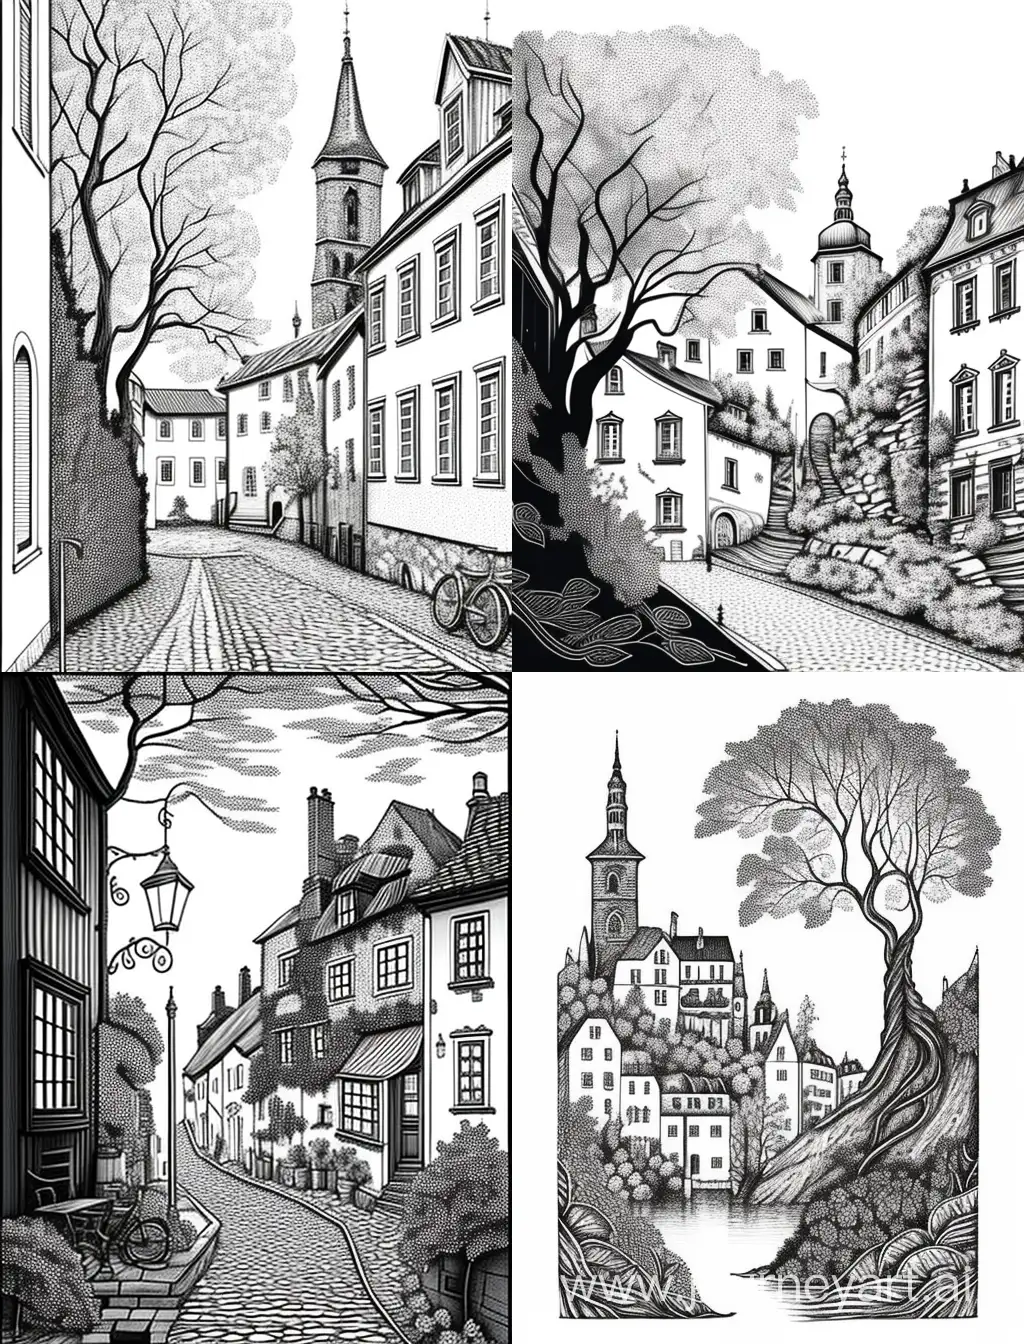  пейзаж в стиле зентангл раскраска, старый город в Европе, лайн-арт